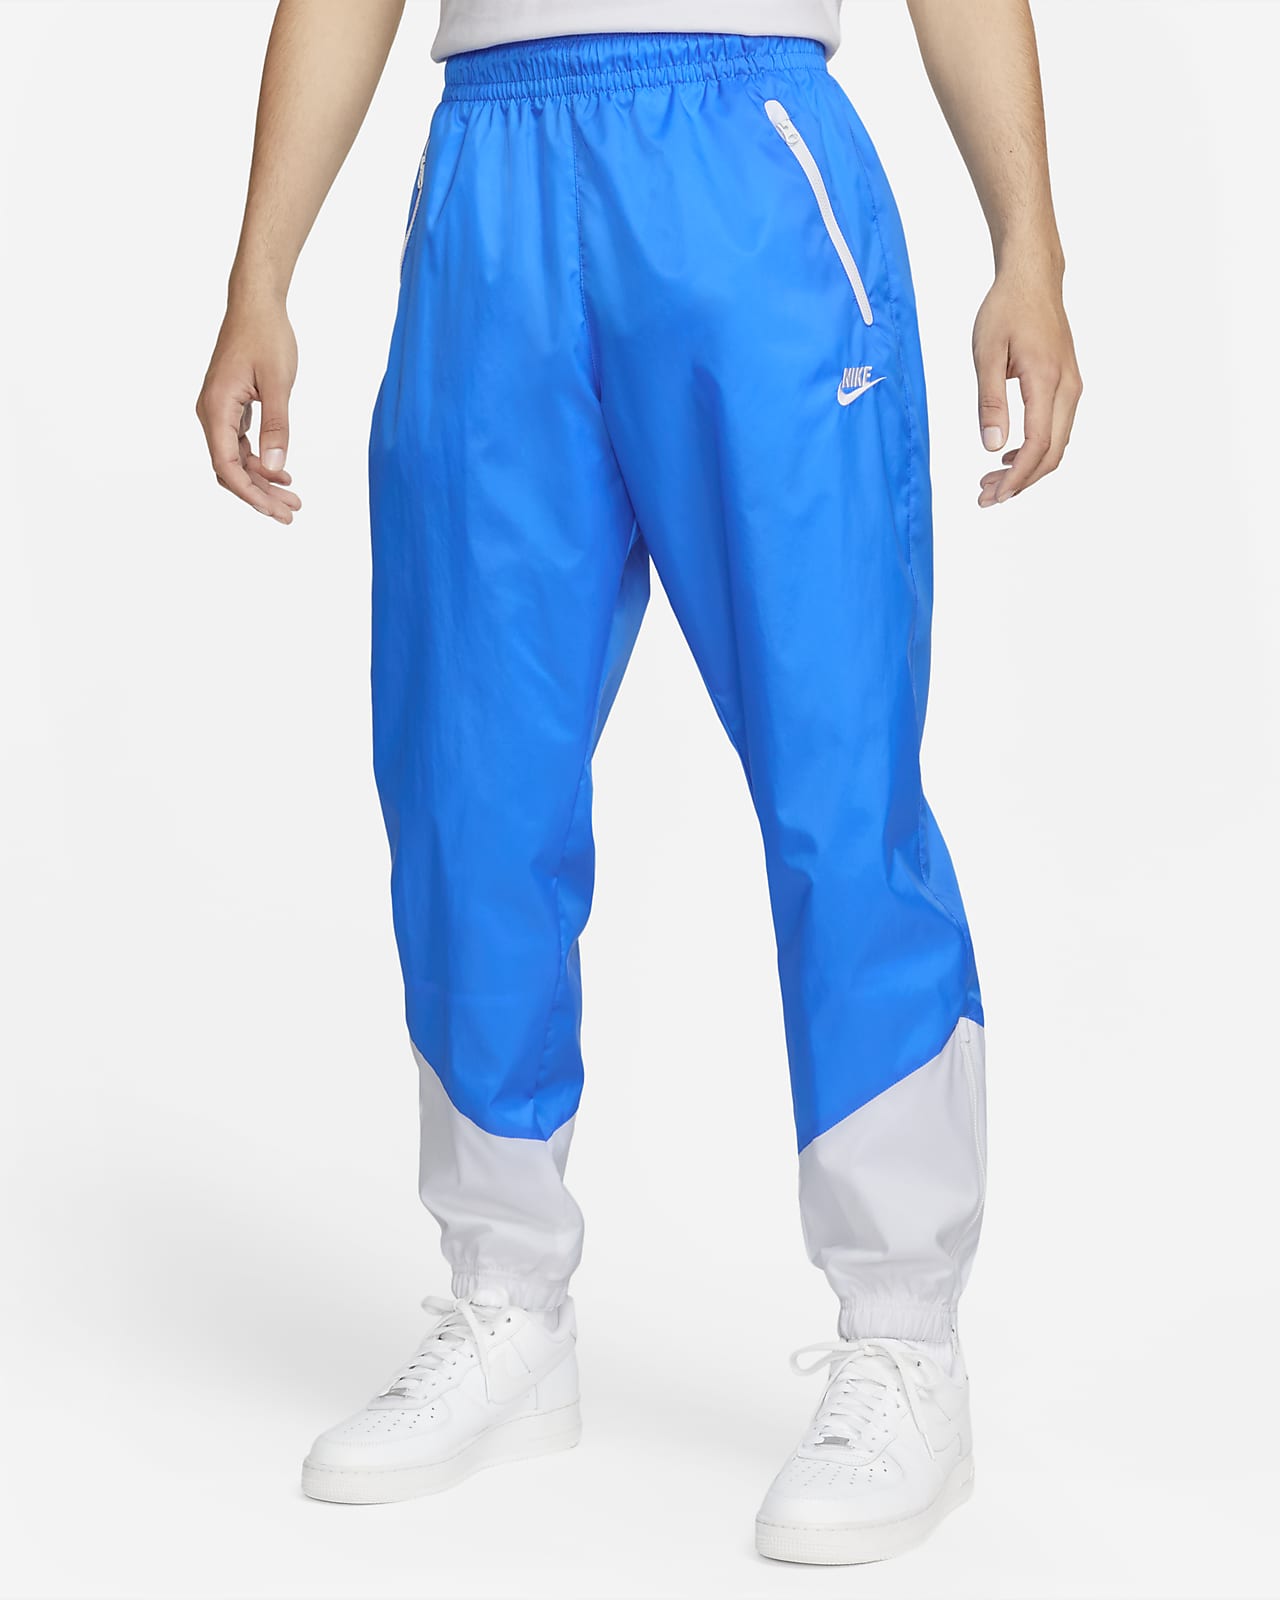 Amazoncom Nike Wind Pants